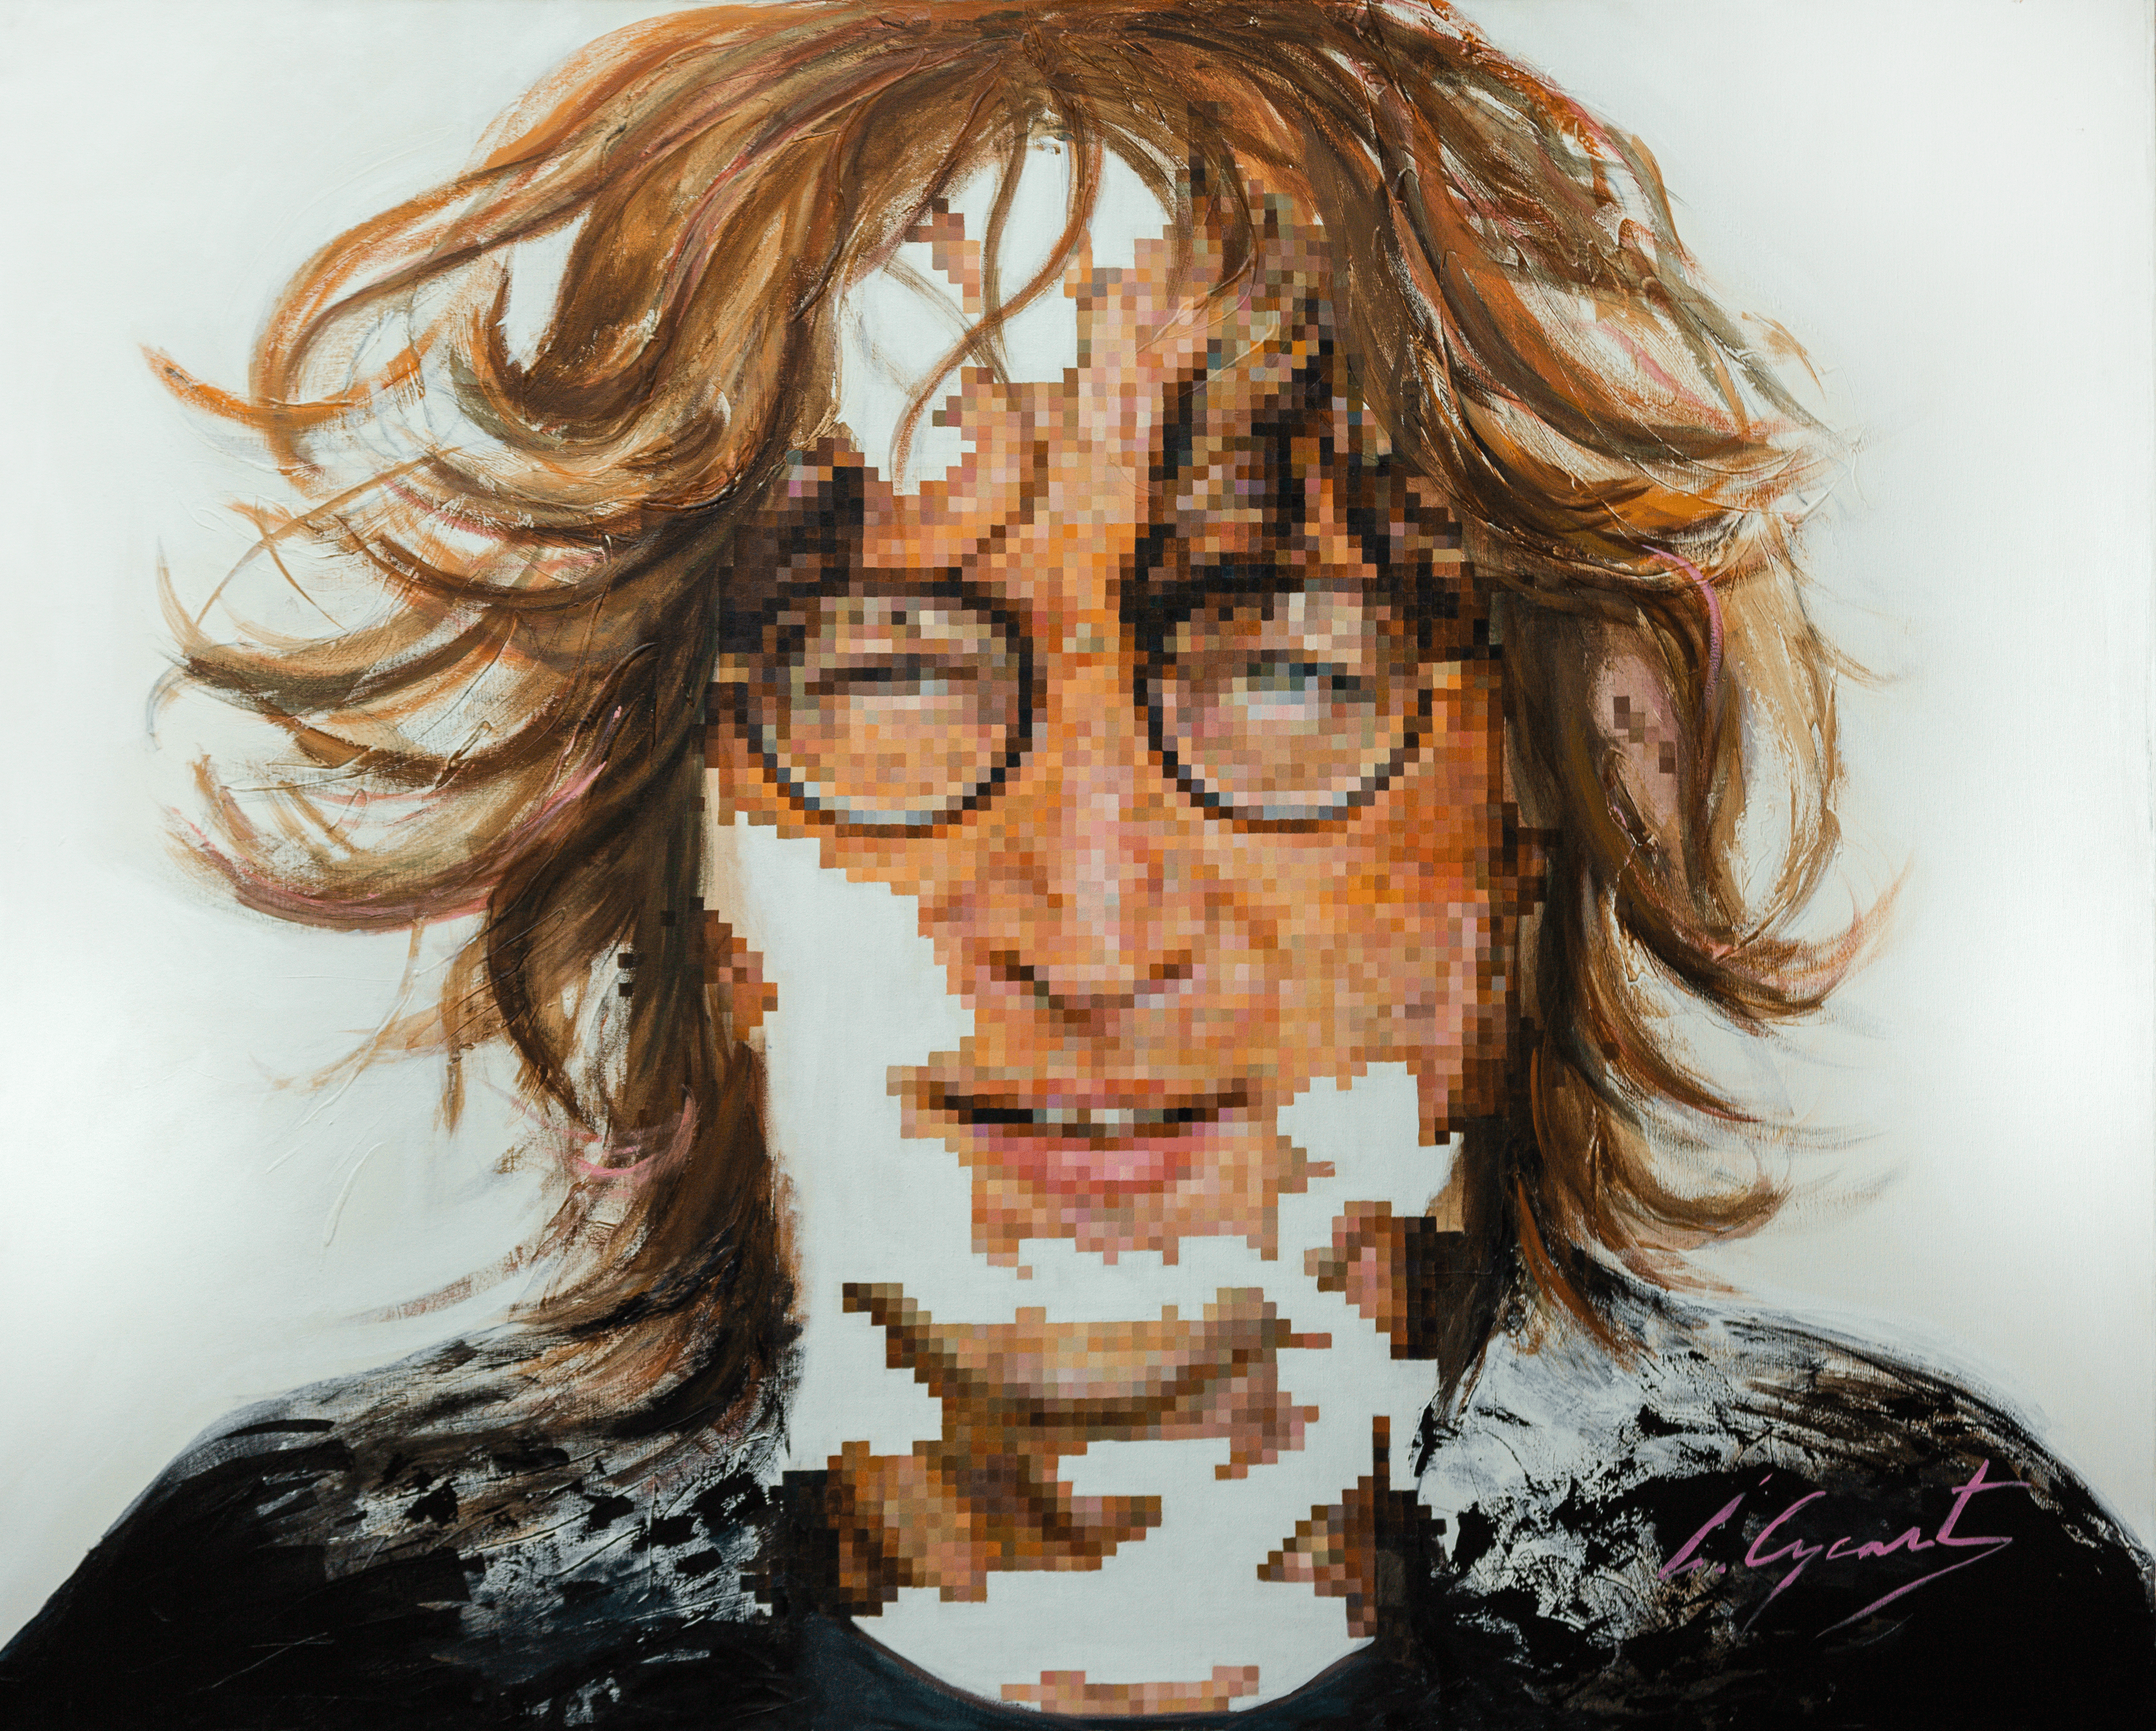 " Freedom and Peace" John Lennon